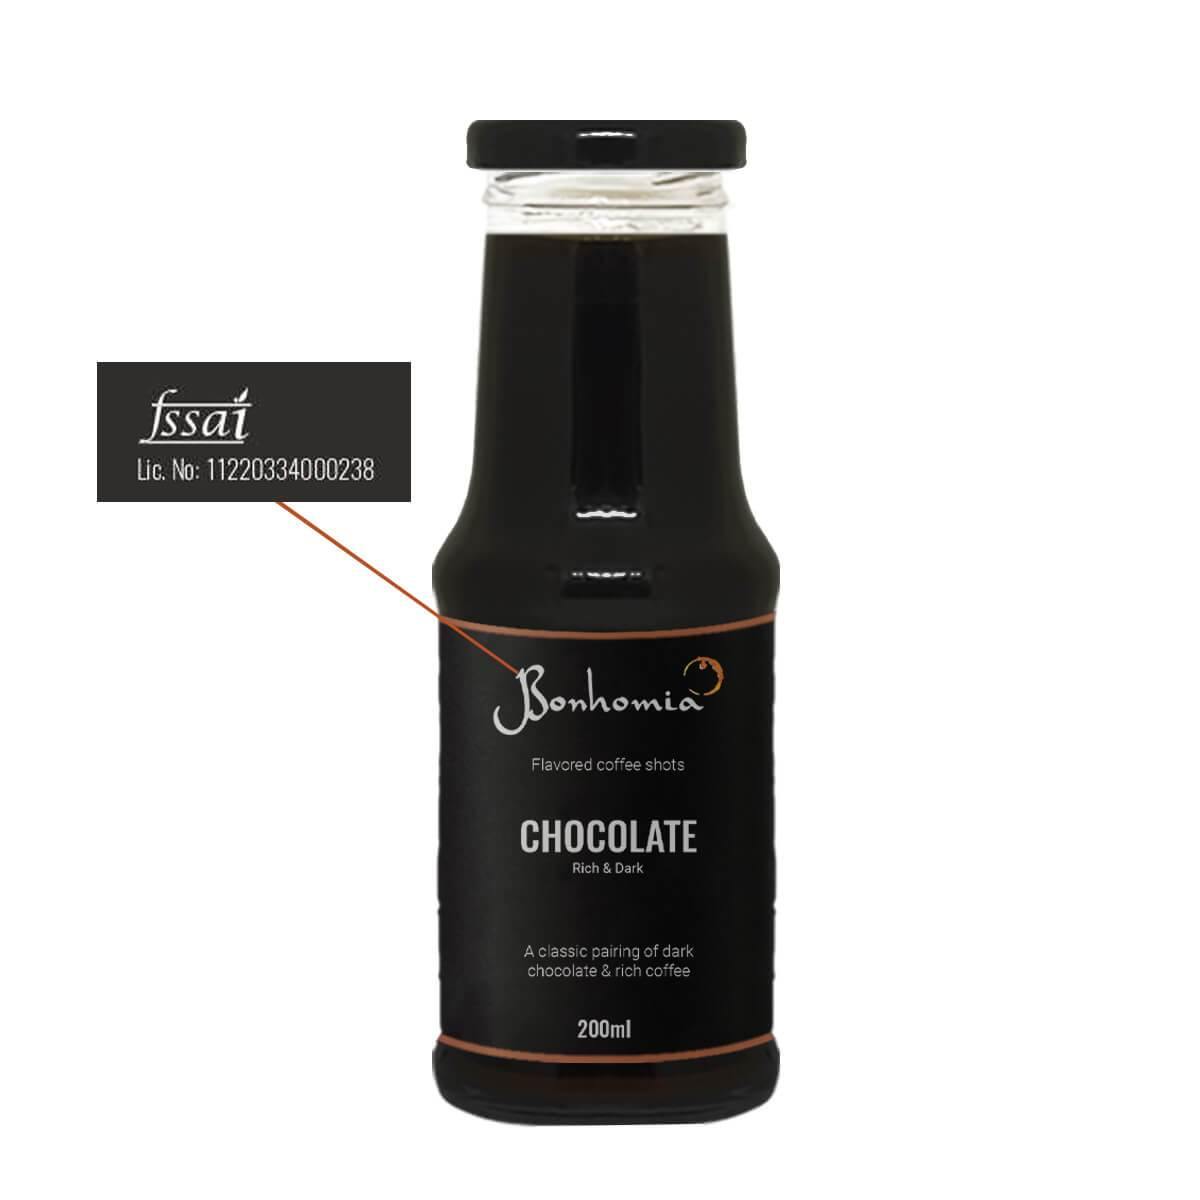 Chocolate Liquid Concentrates - 2 Bottles